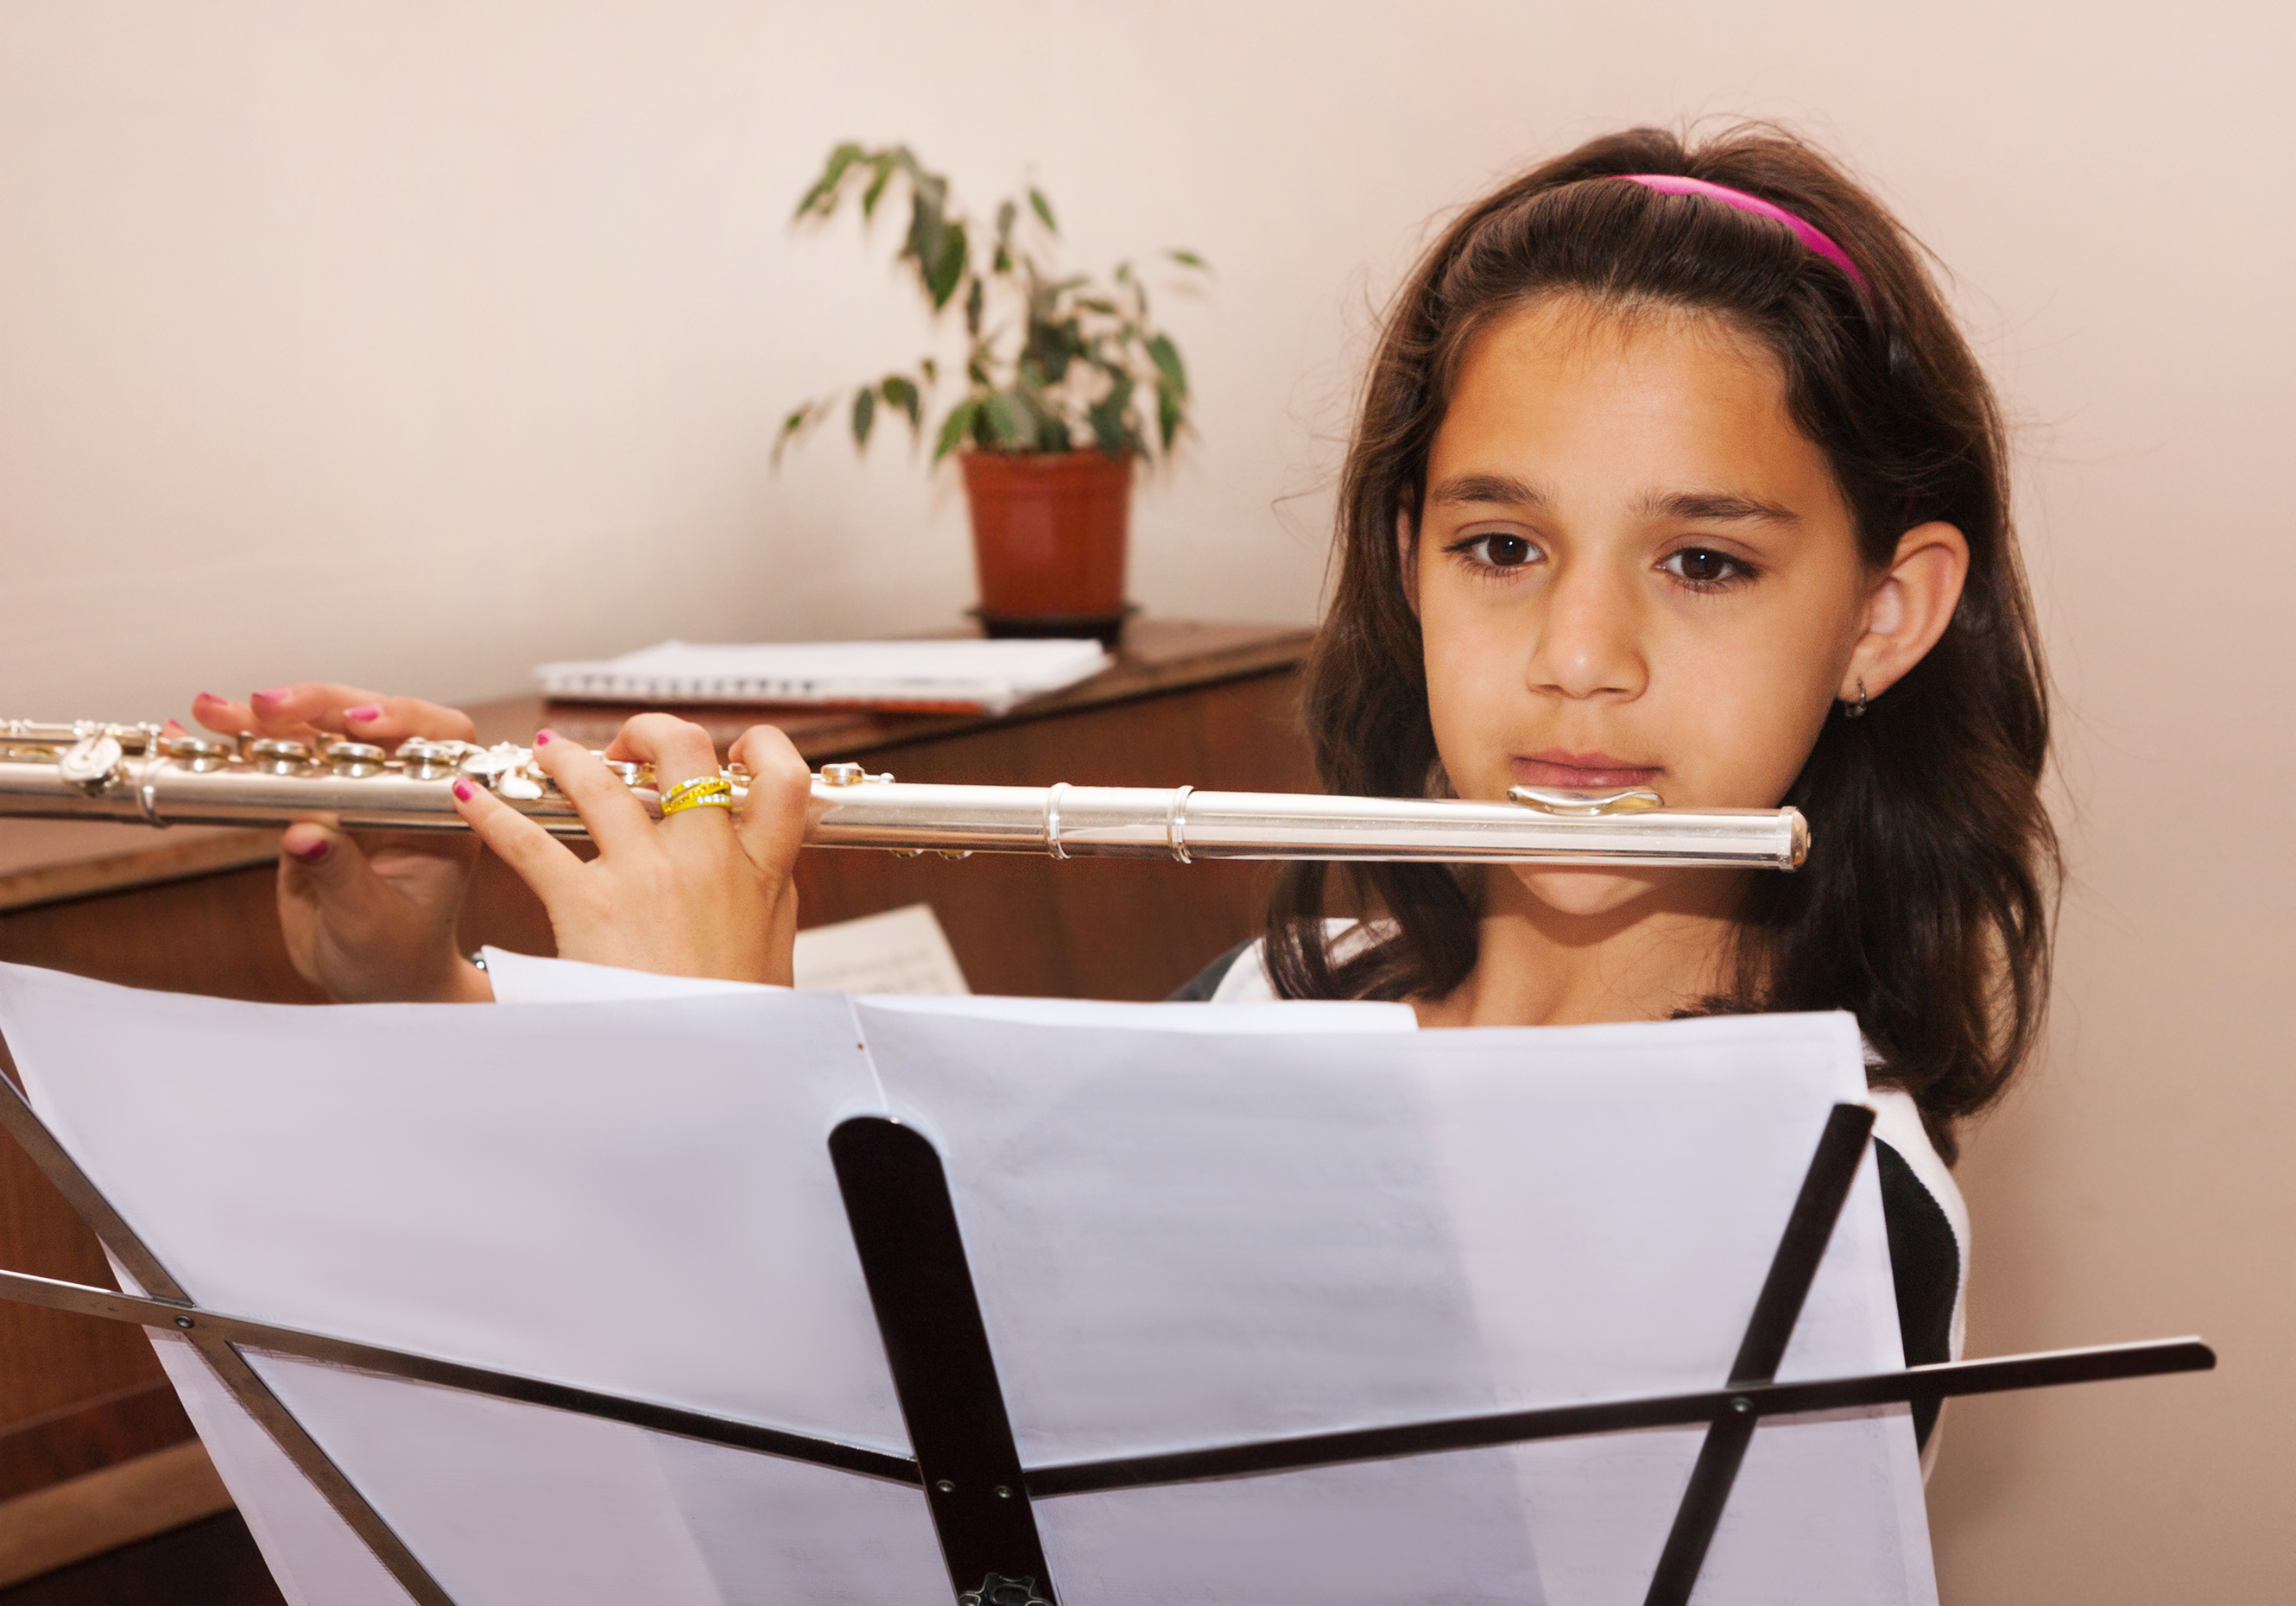 flute lessons